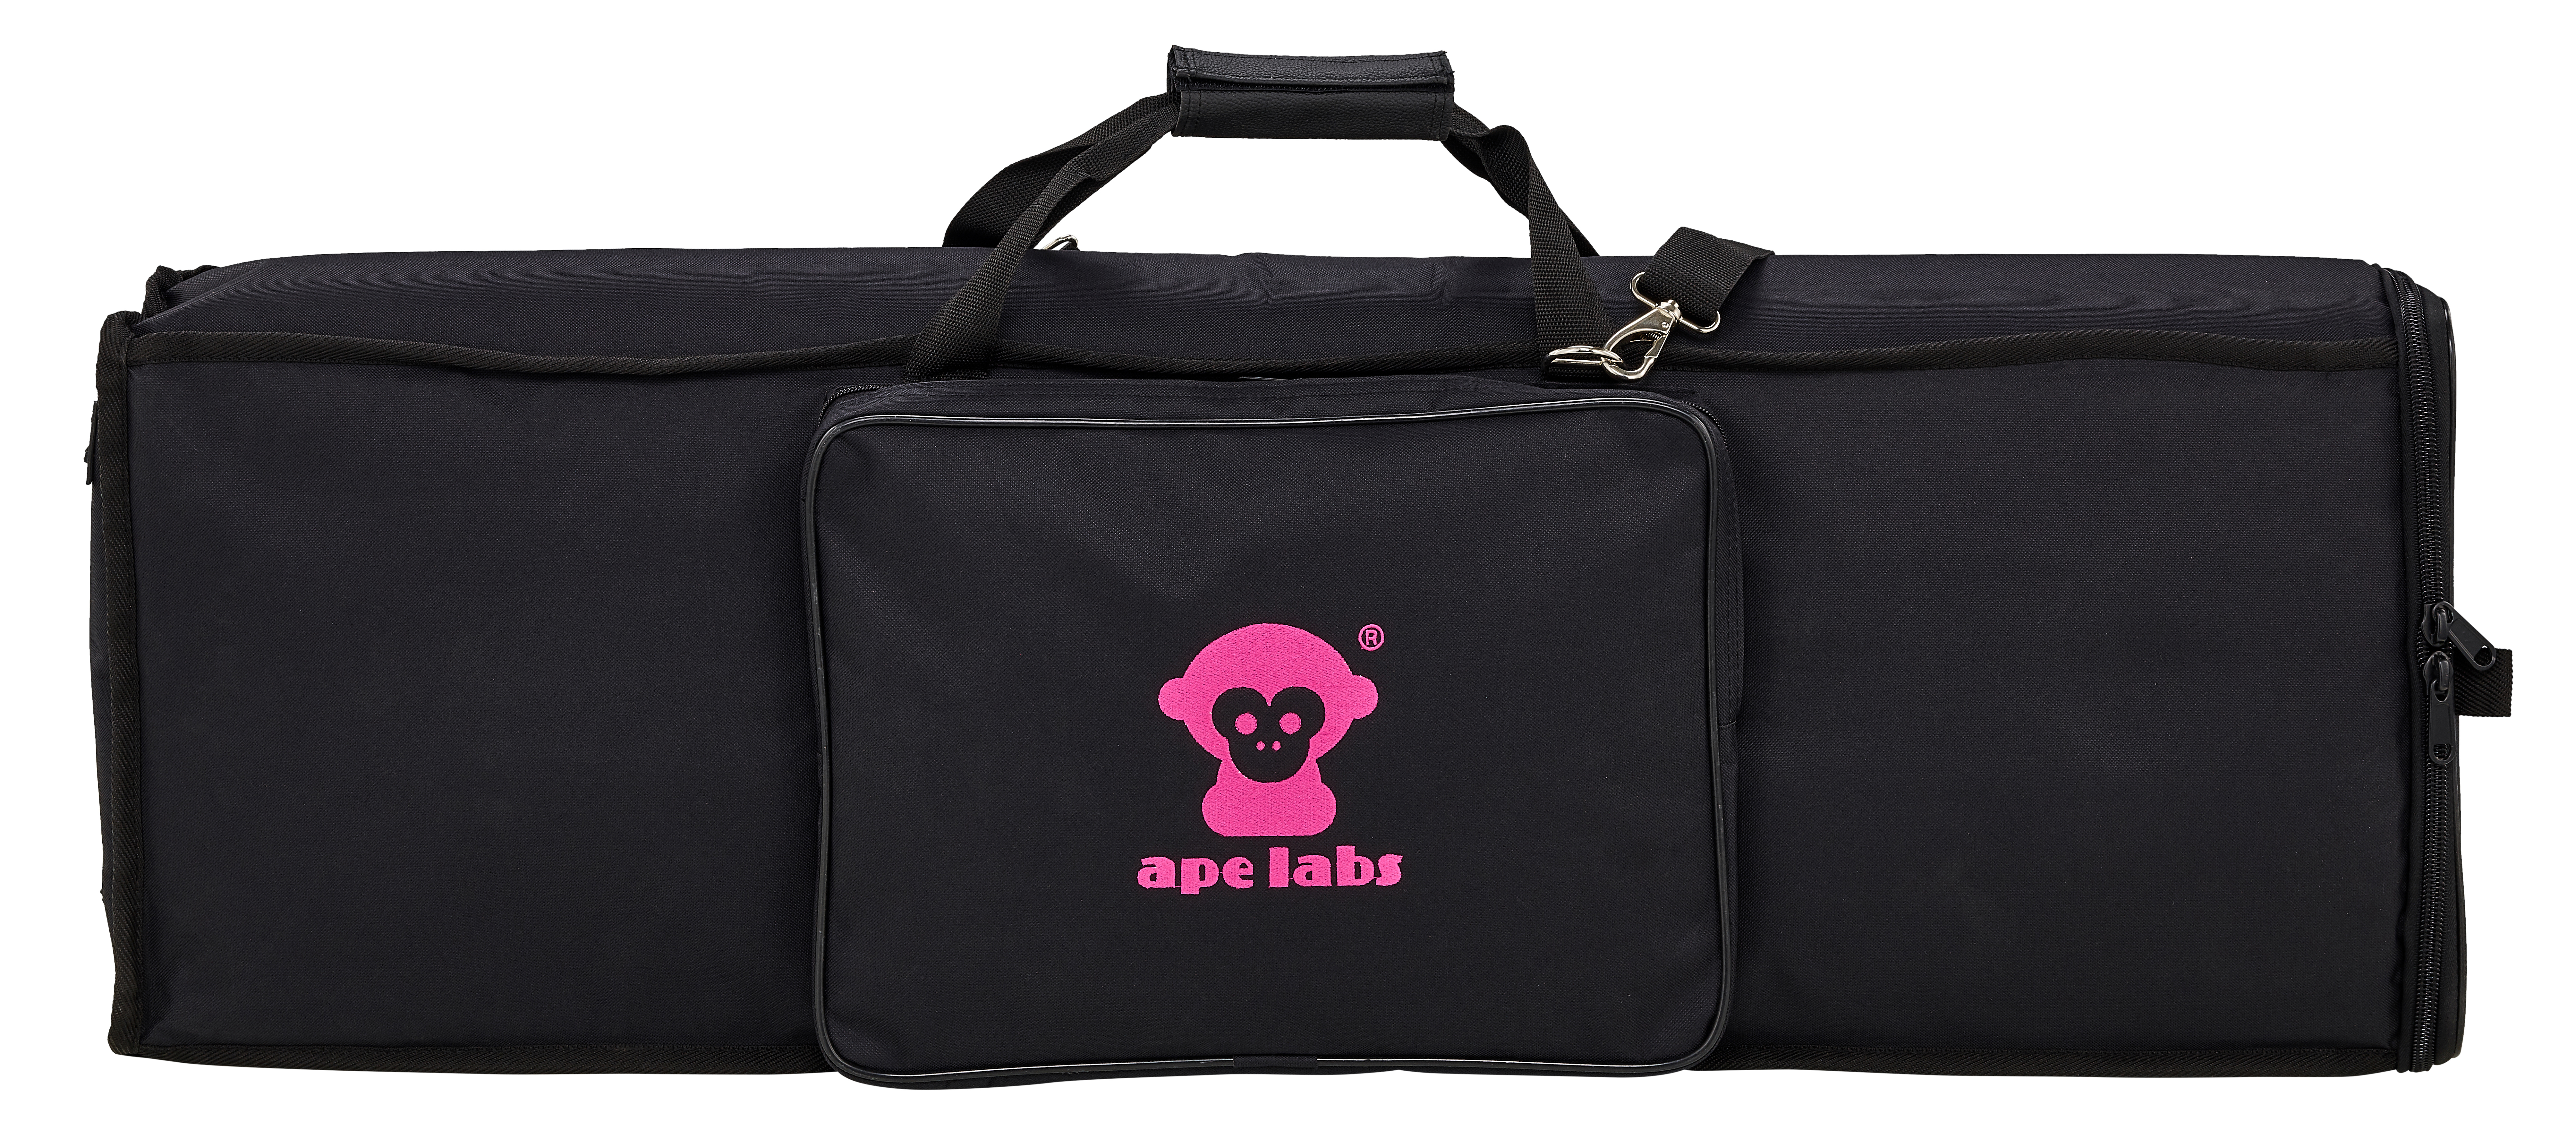 Ape Labs - Universal TubeBag